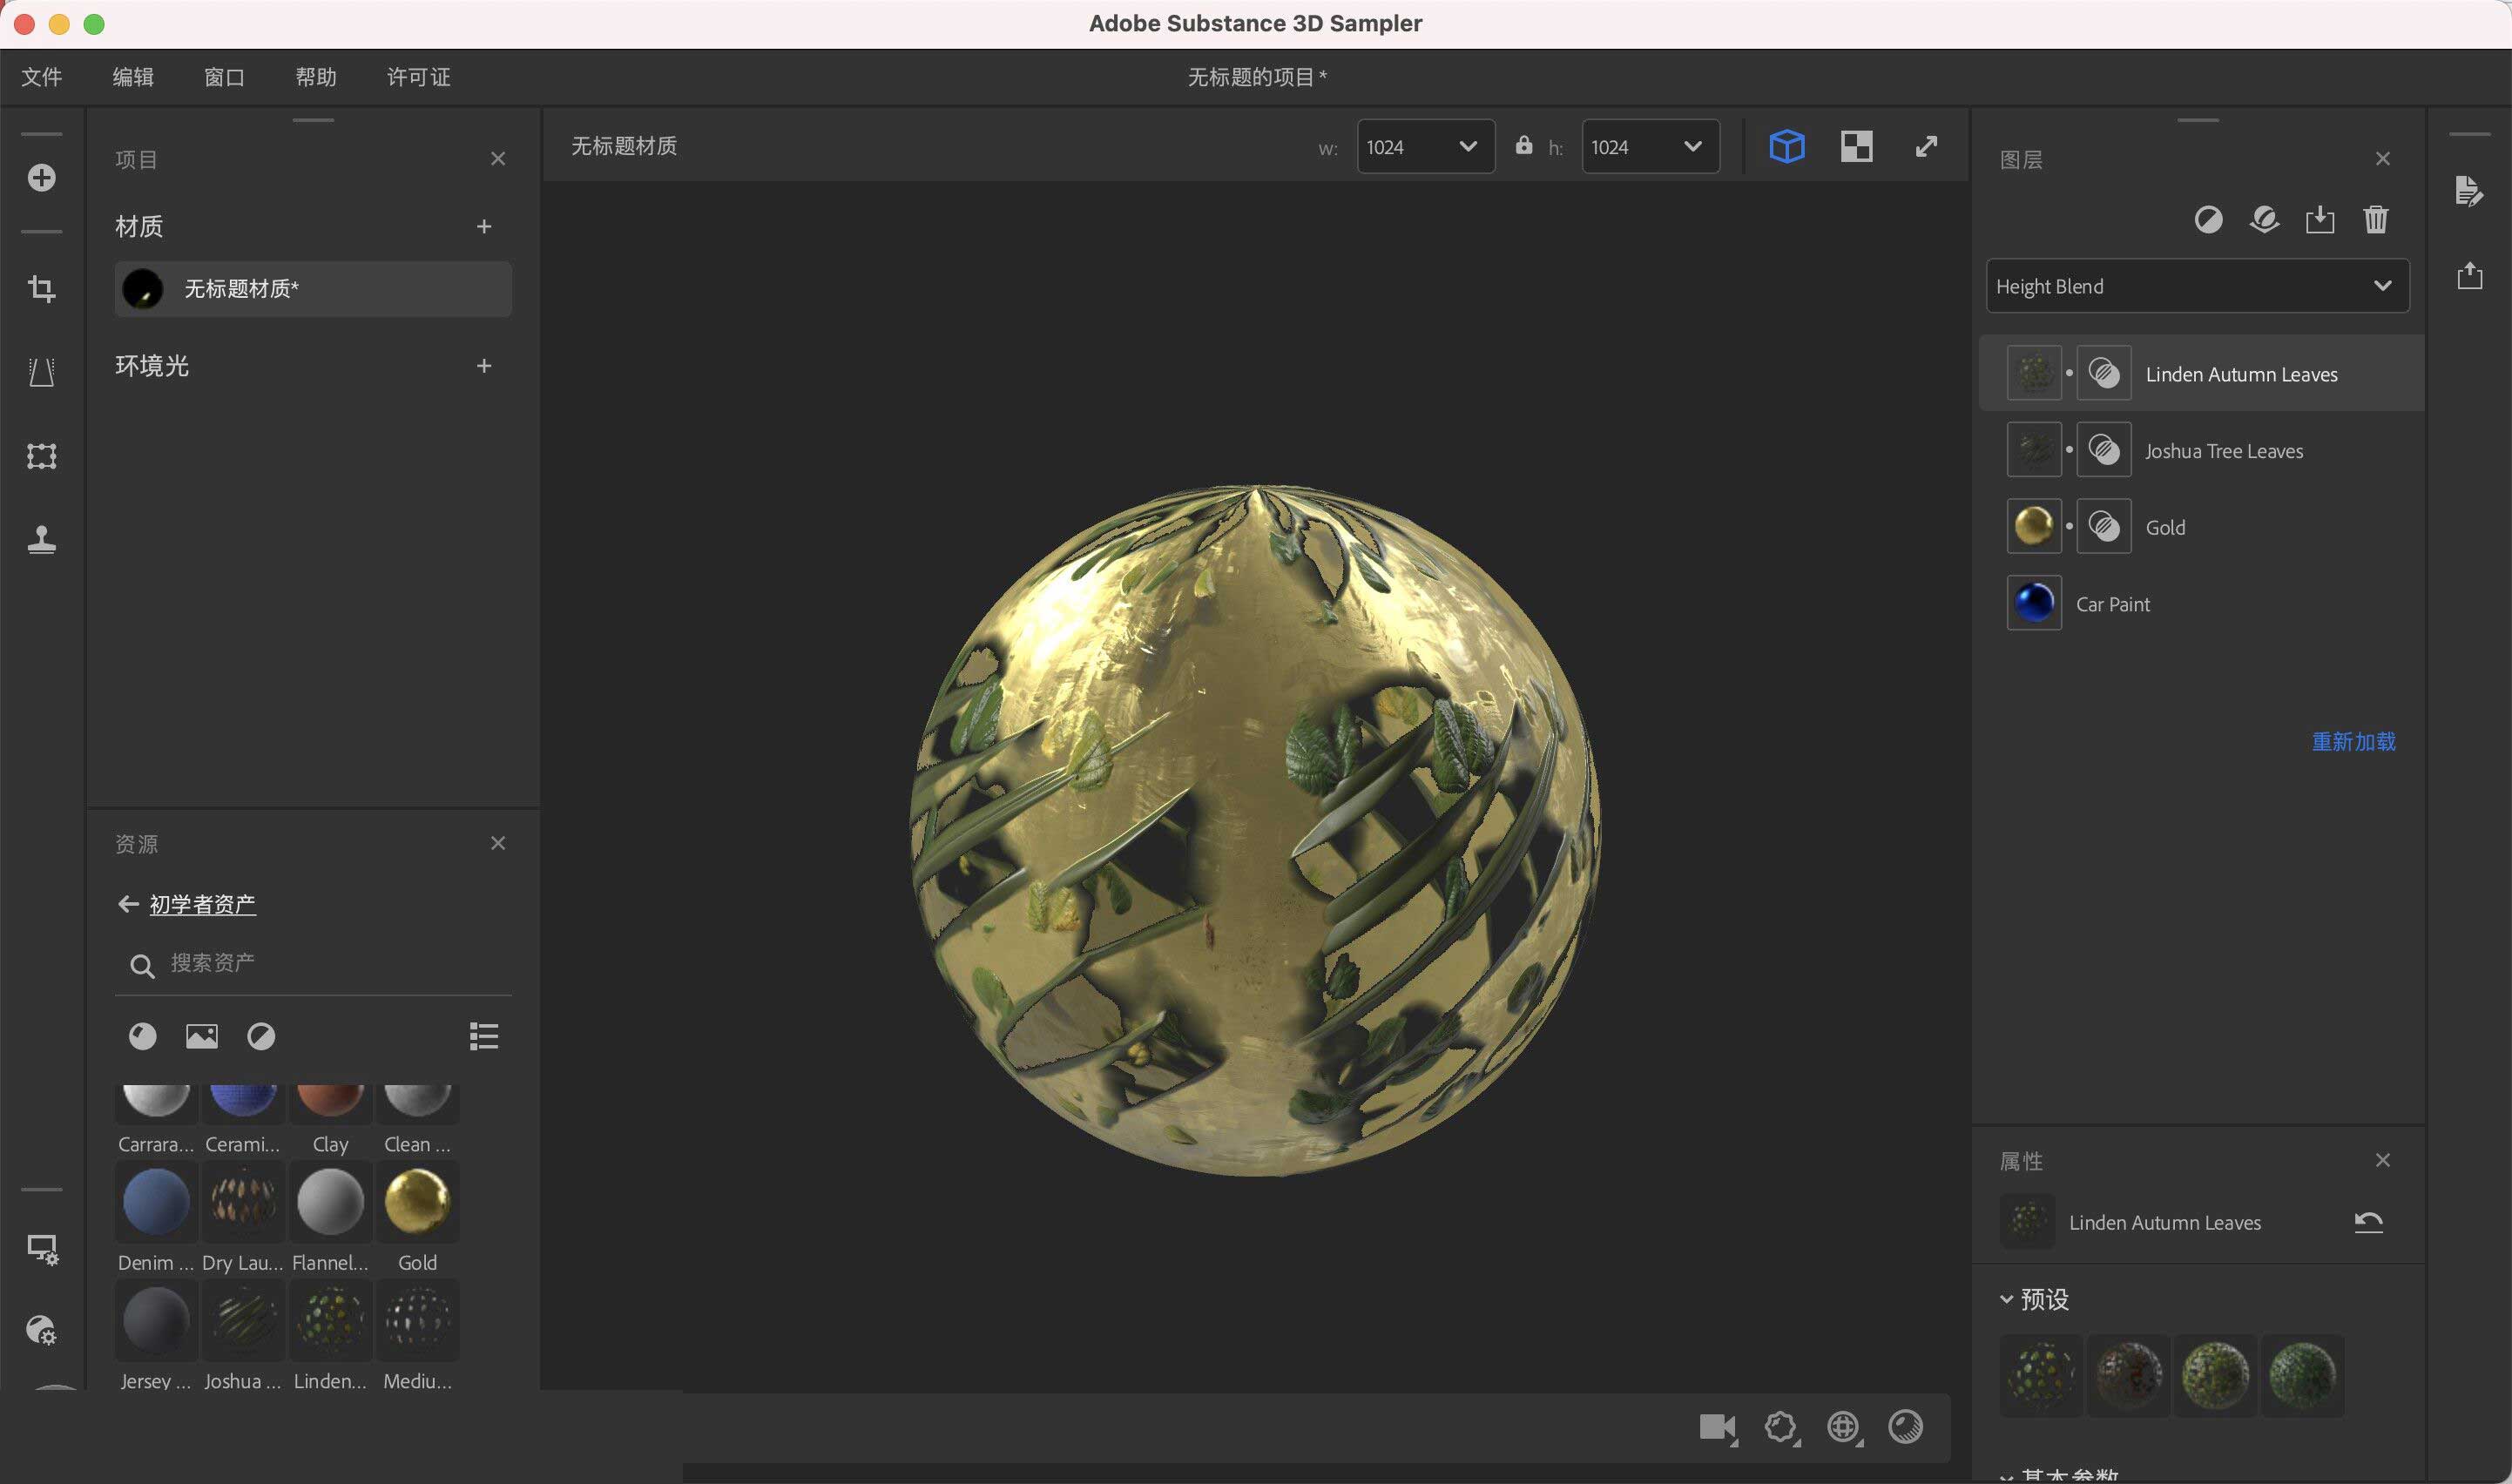 Adobe Substance 3D Sampler 4.1.2.3298 instal the new version for ipod